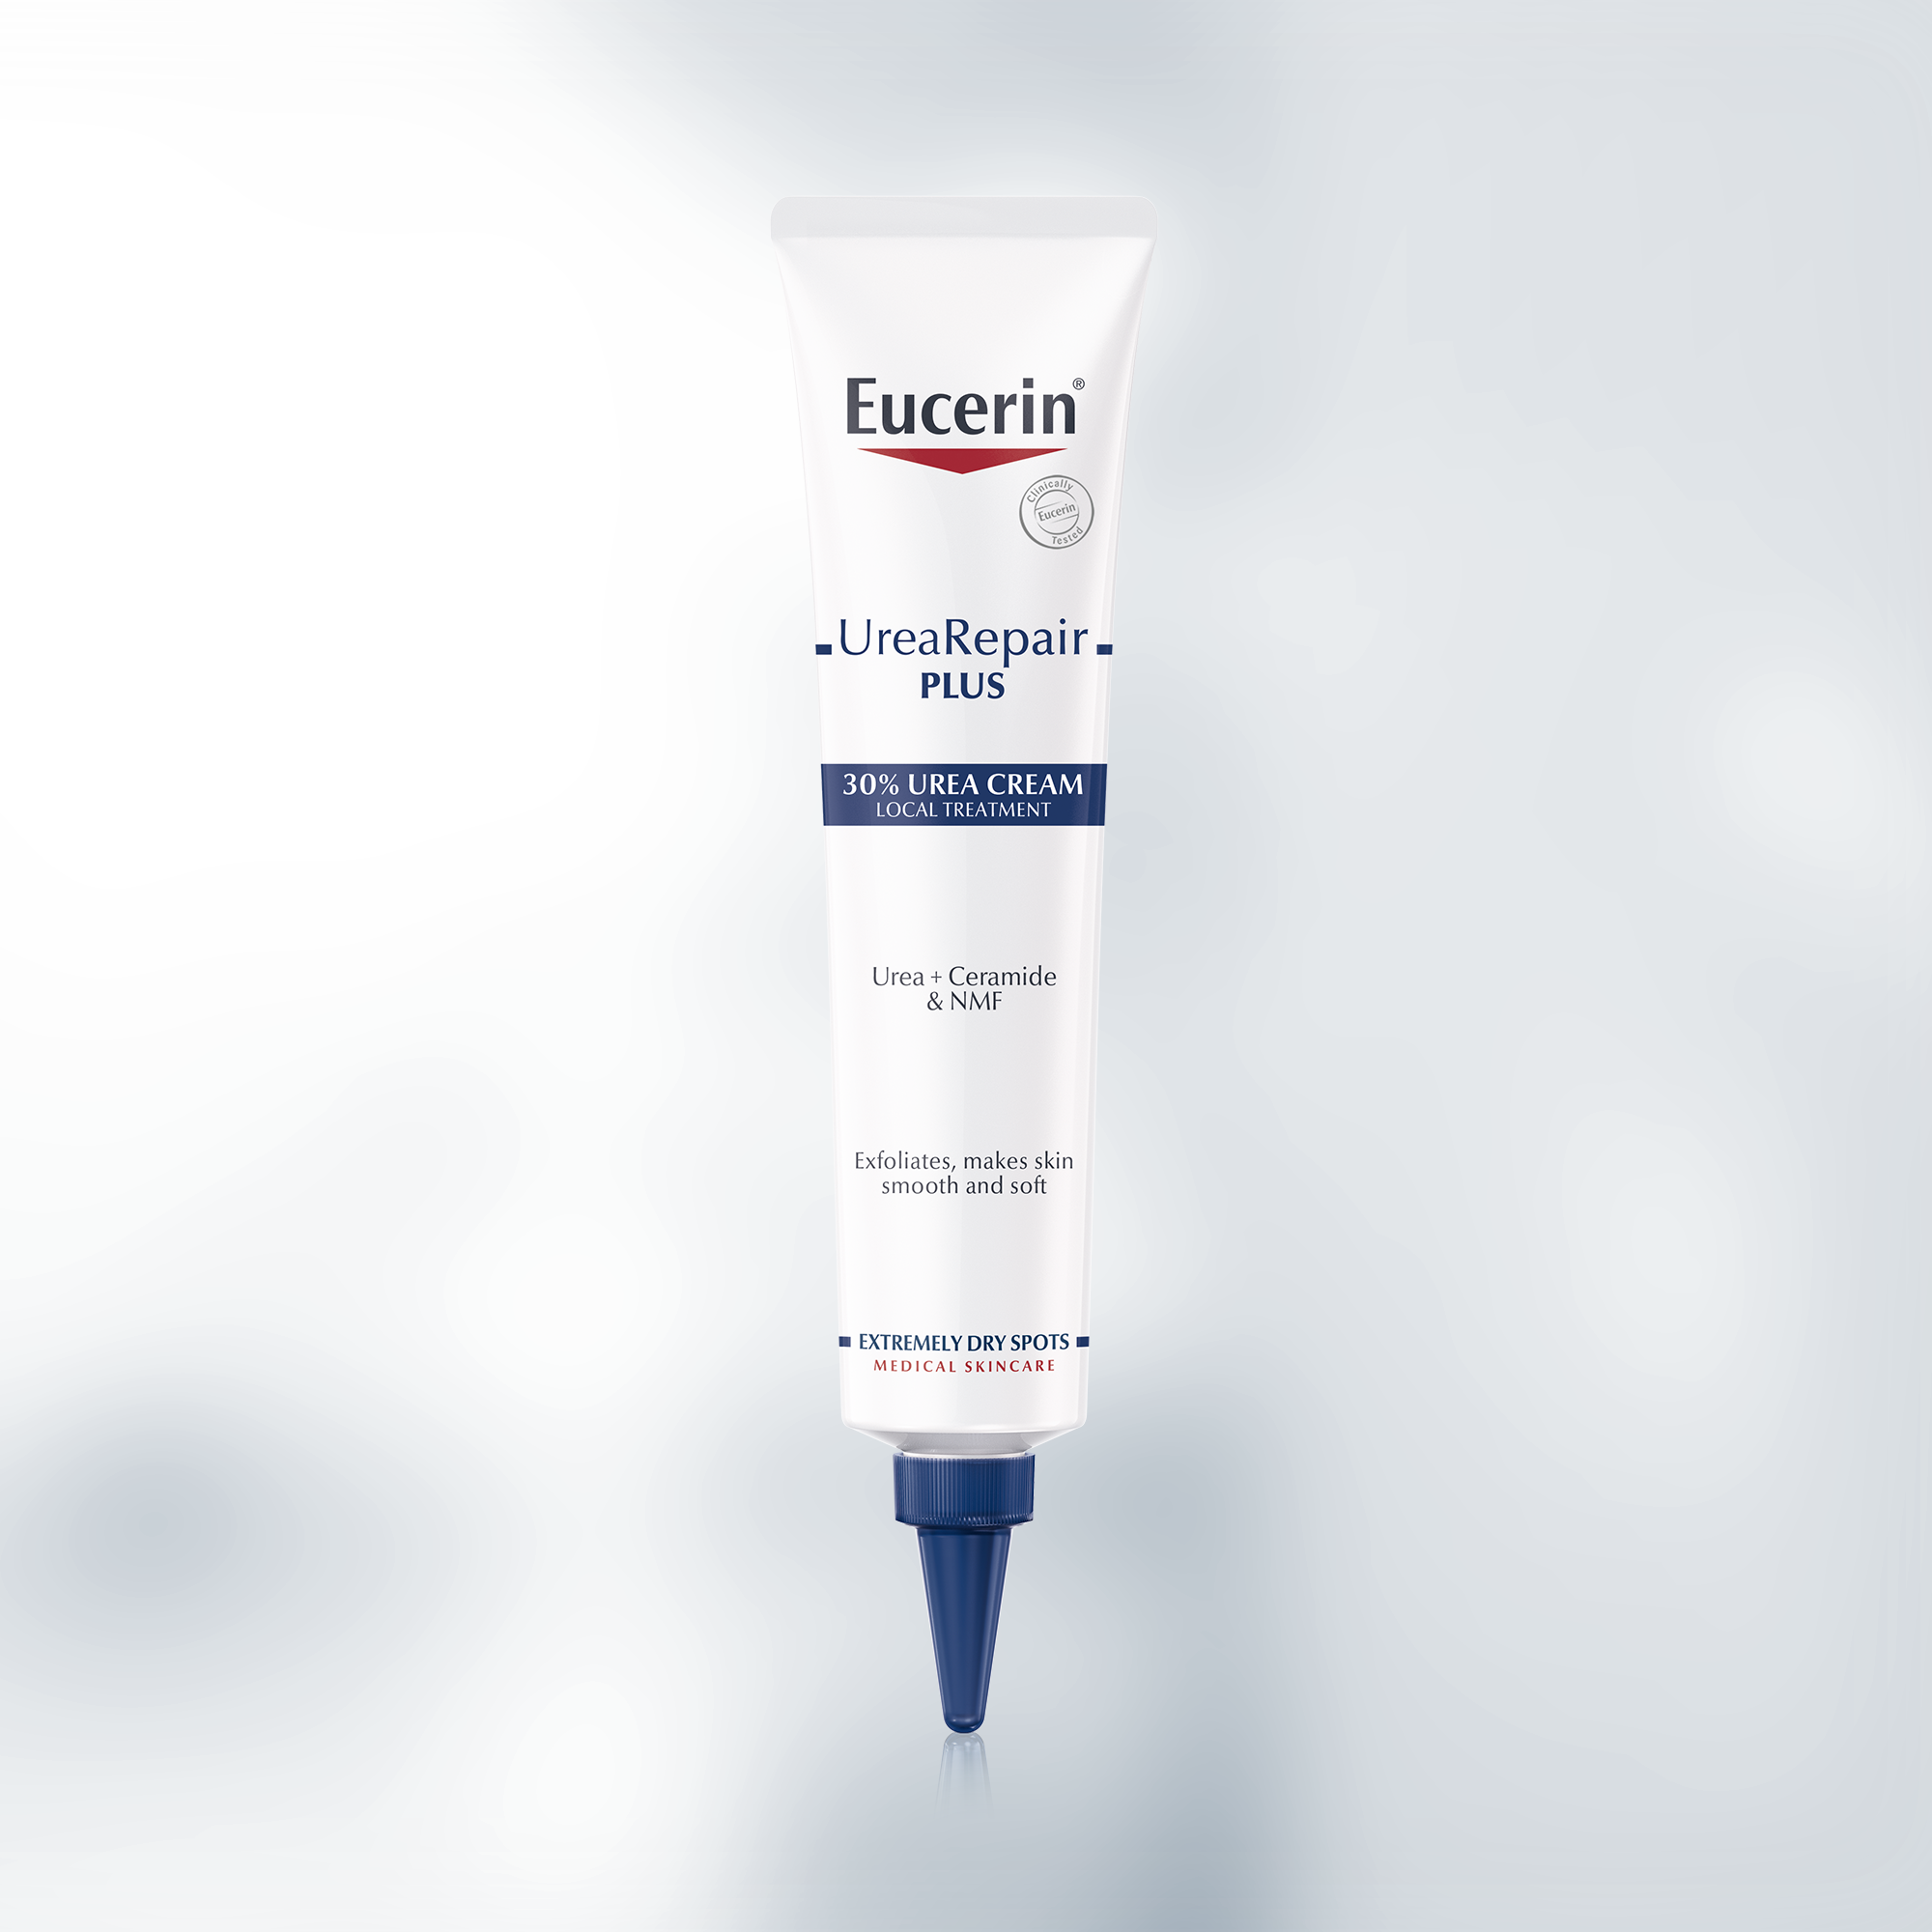 hoofdstad relais snel UreaRepair PLUS Treatment Cream | Extremely dry areas of skin | Eucerin